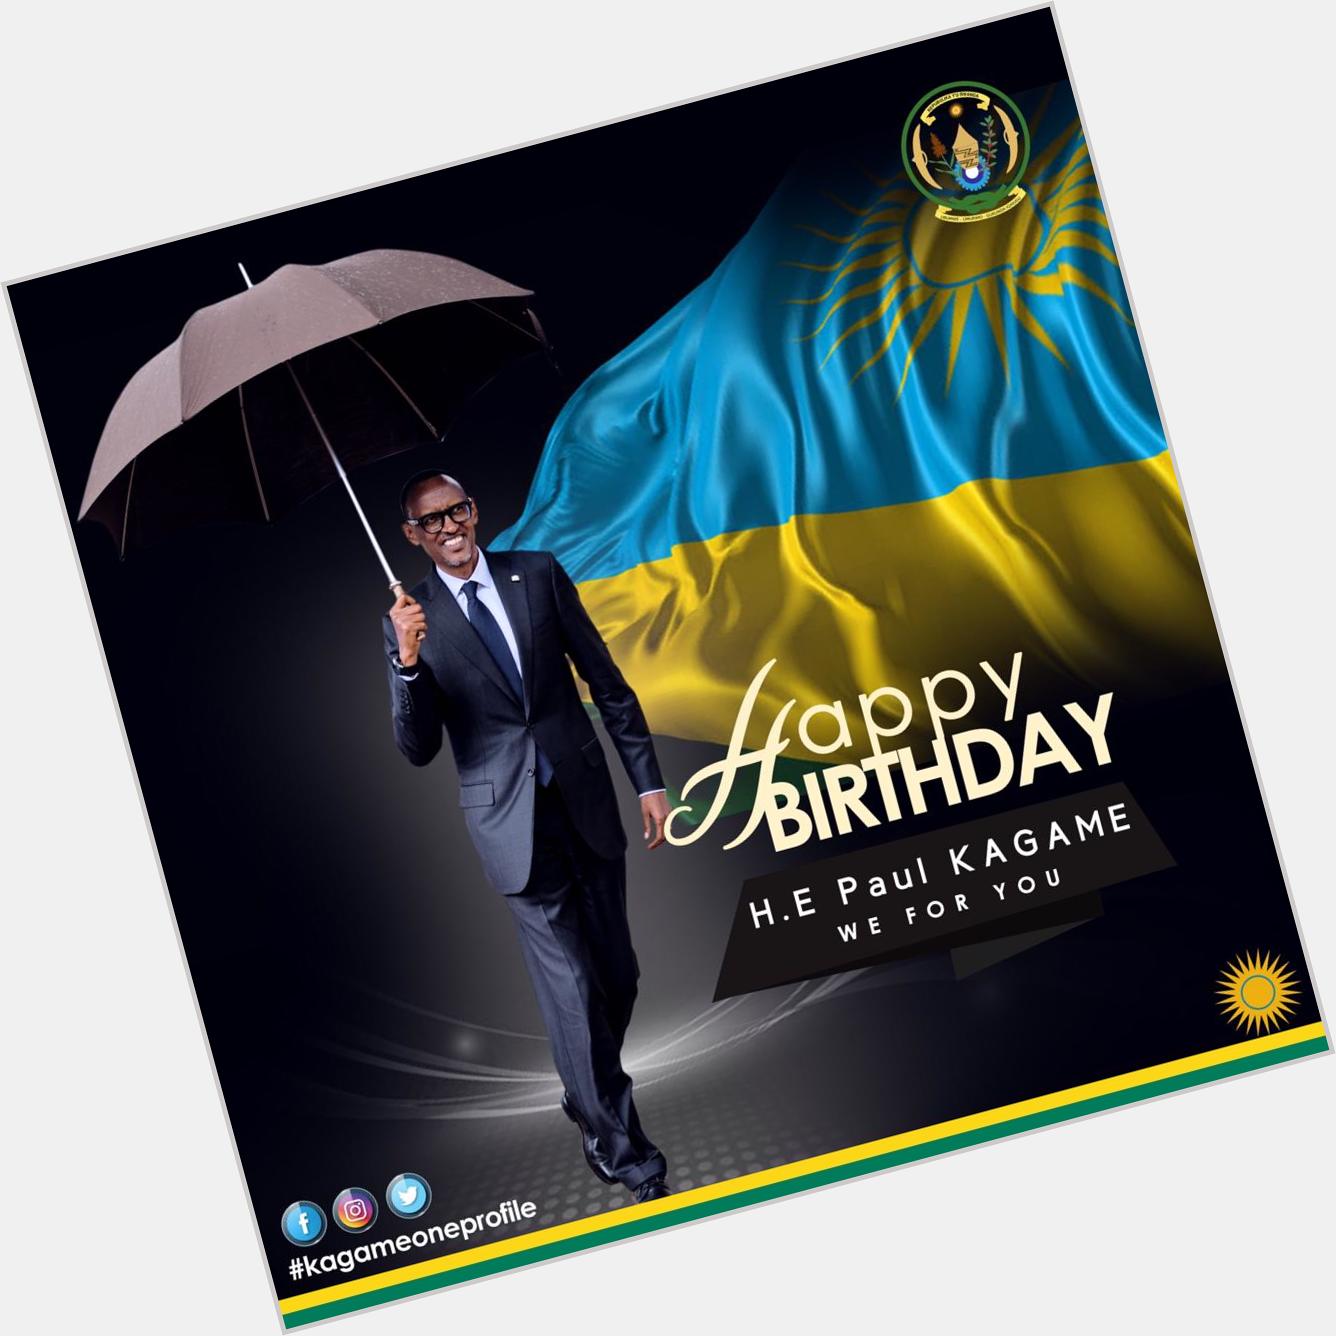 Happy birthday Paul Kagame! Ntawe utakwishimira aho umaze kugeza u Rwanda. 